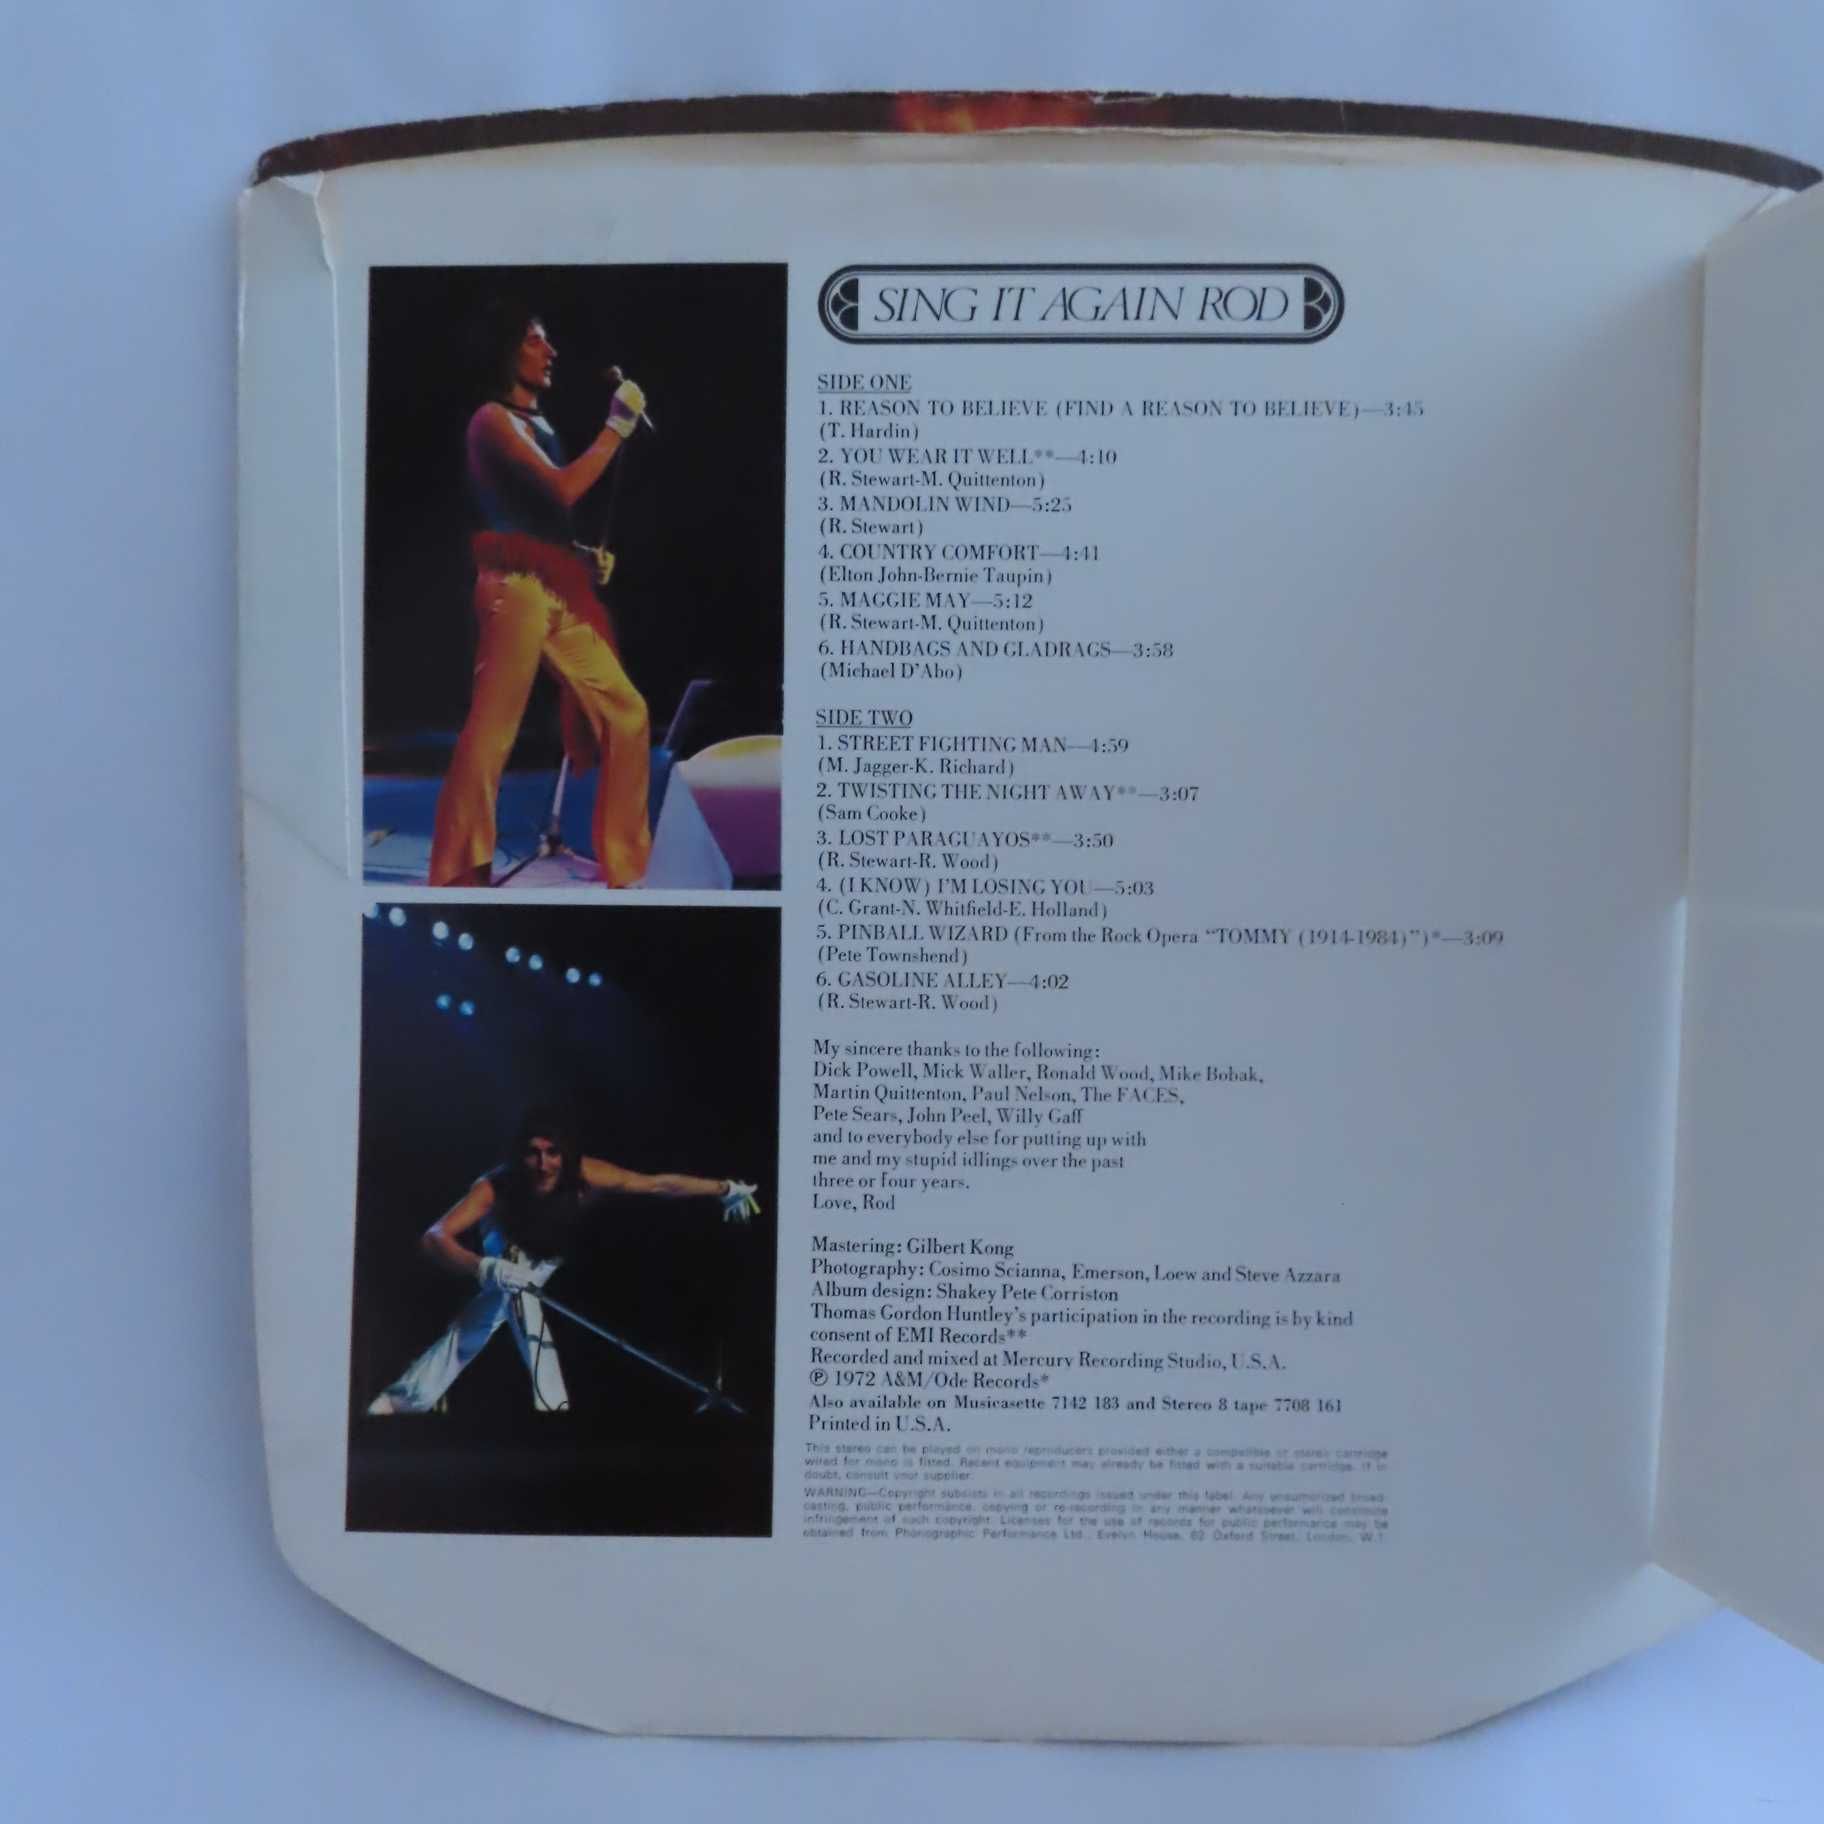 Rod Stewart Sing It Again Rod 1972 LP USA пластинка VG конверт EX